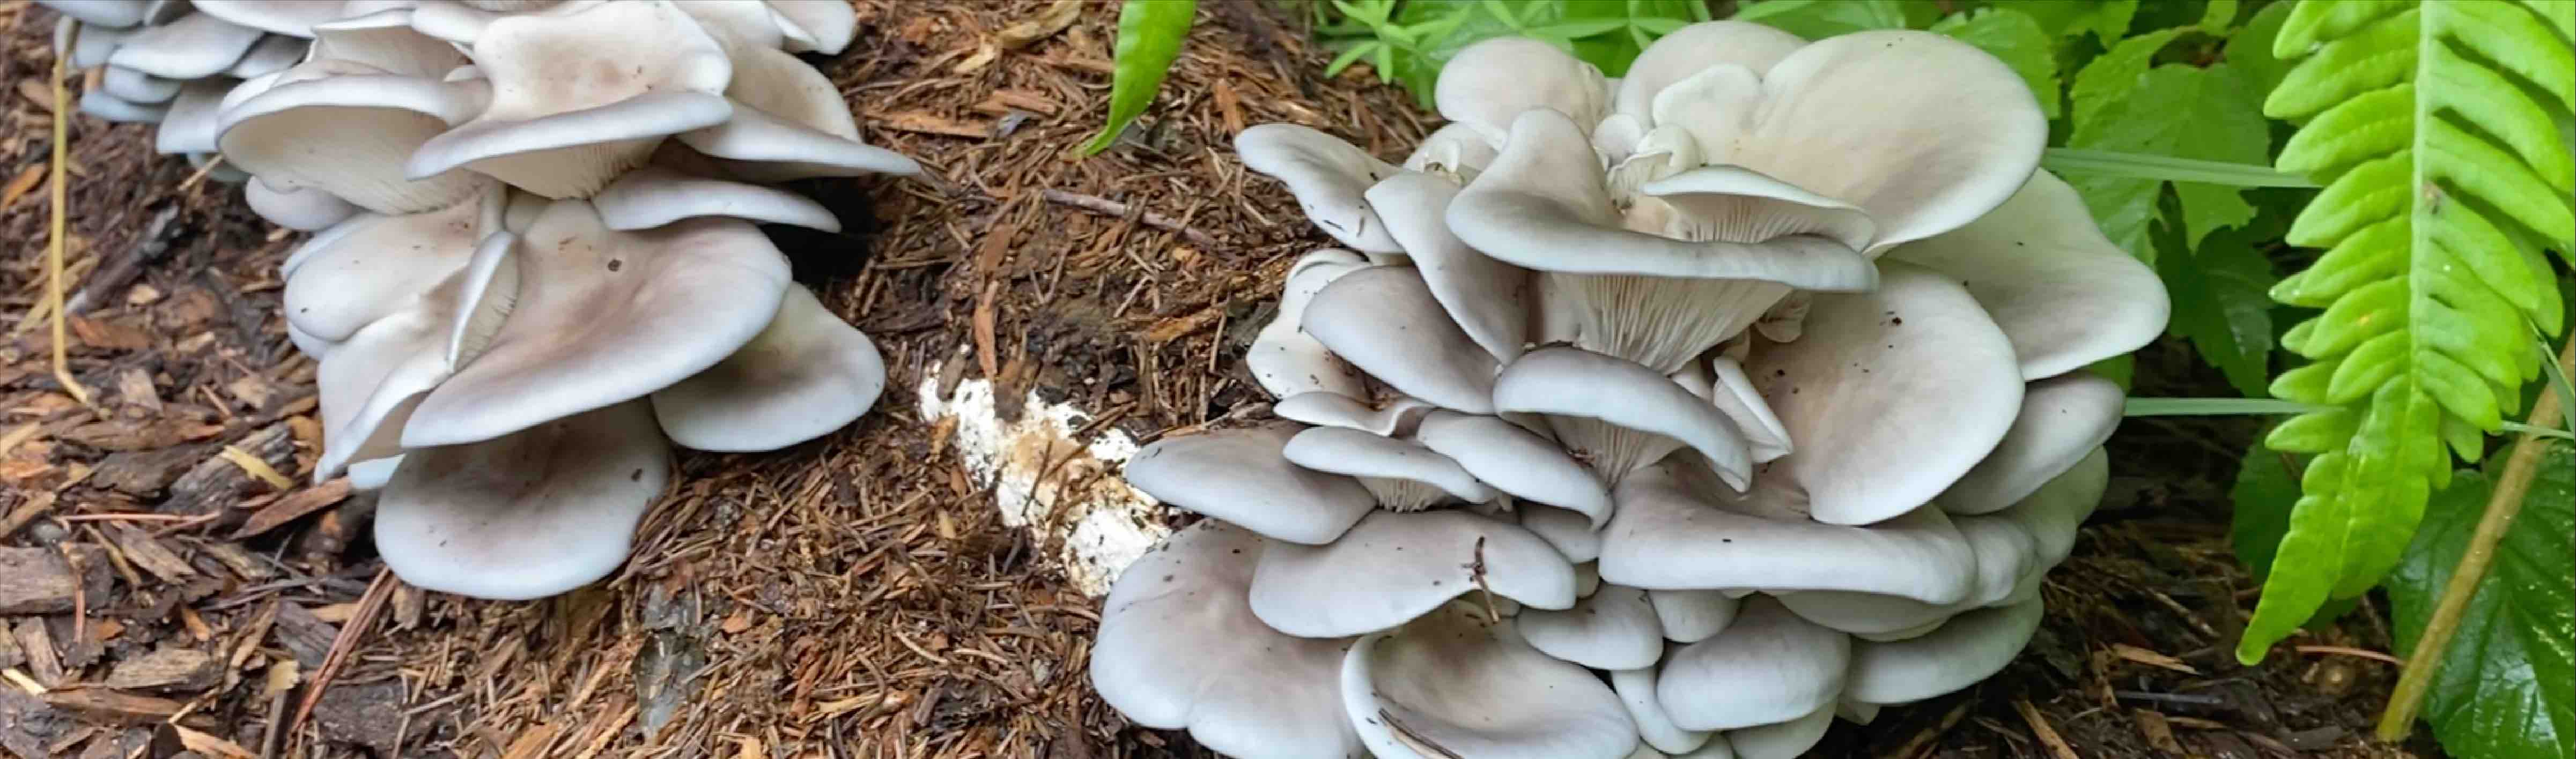 Grey Dove oyster mushrooms growing under ferns